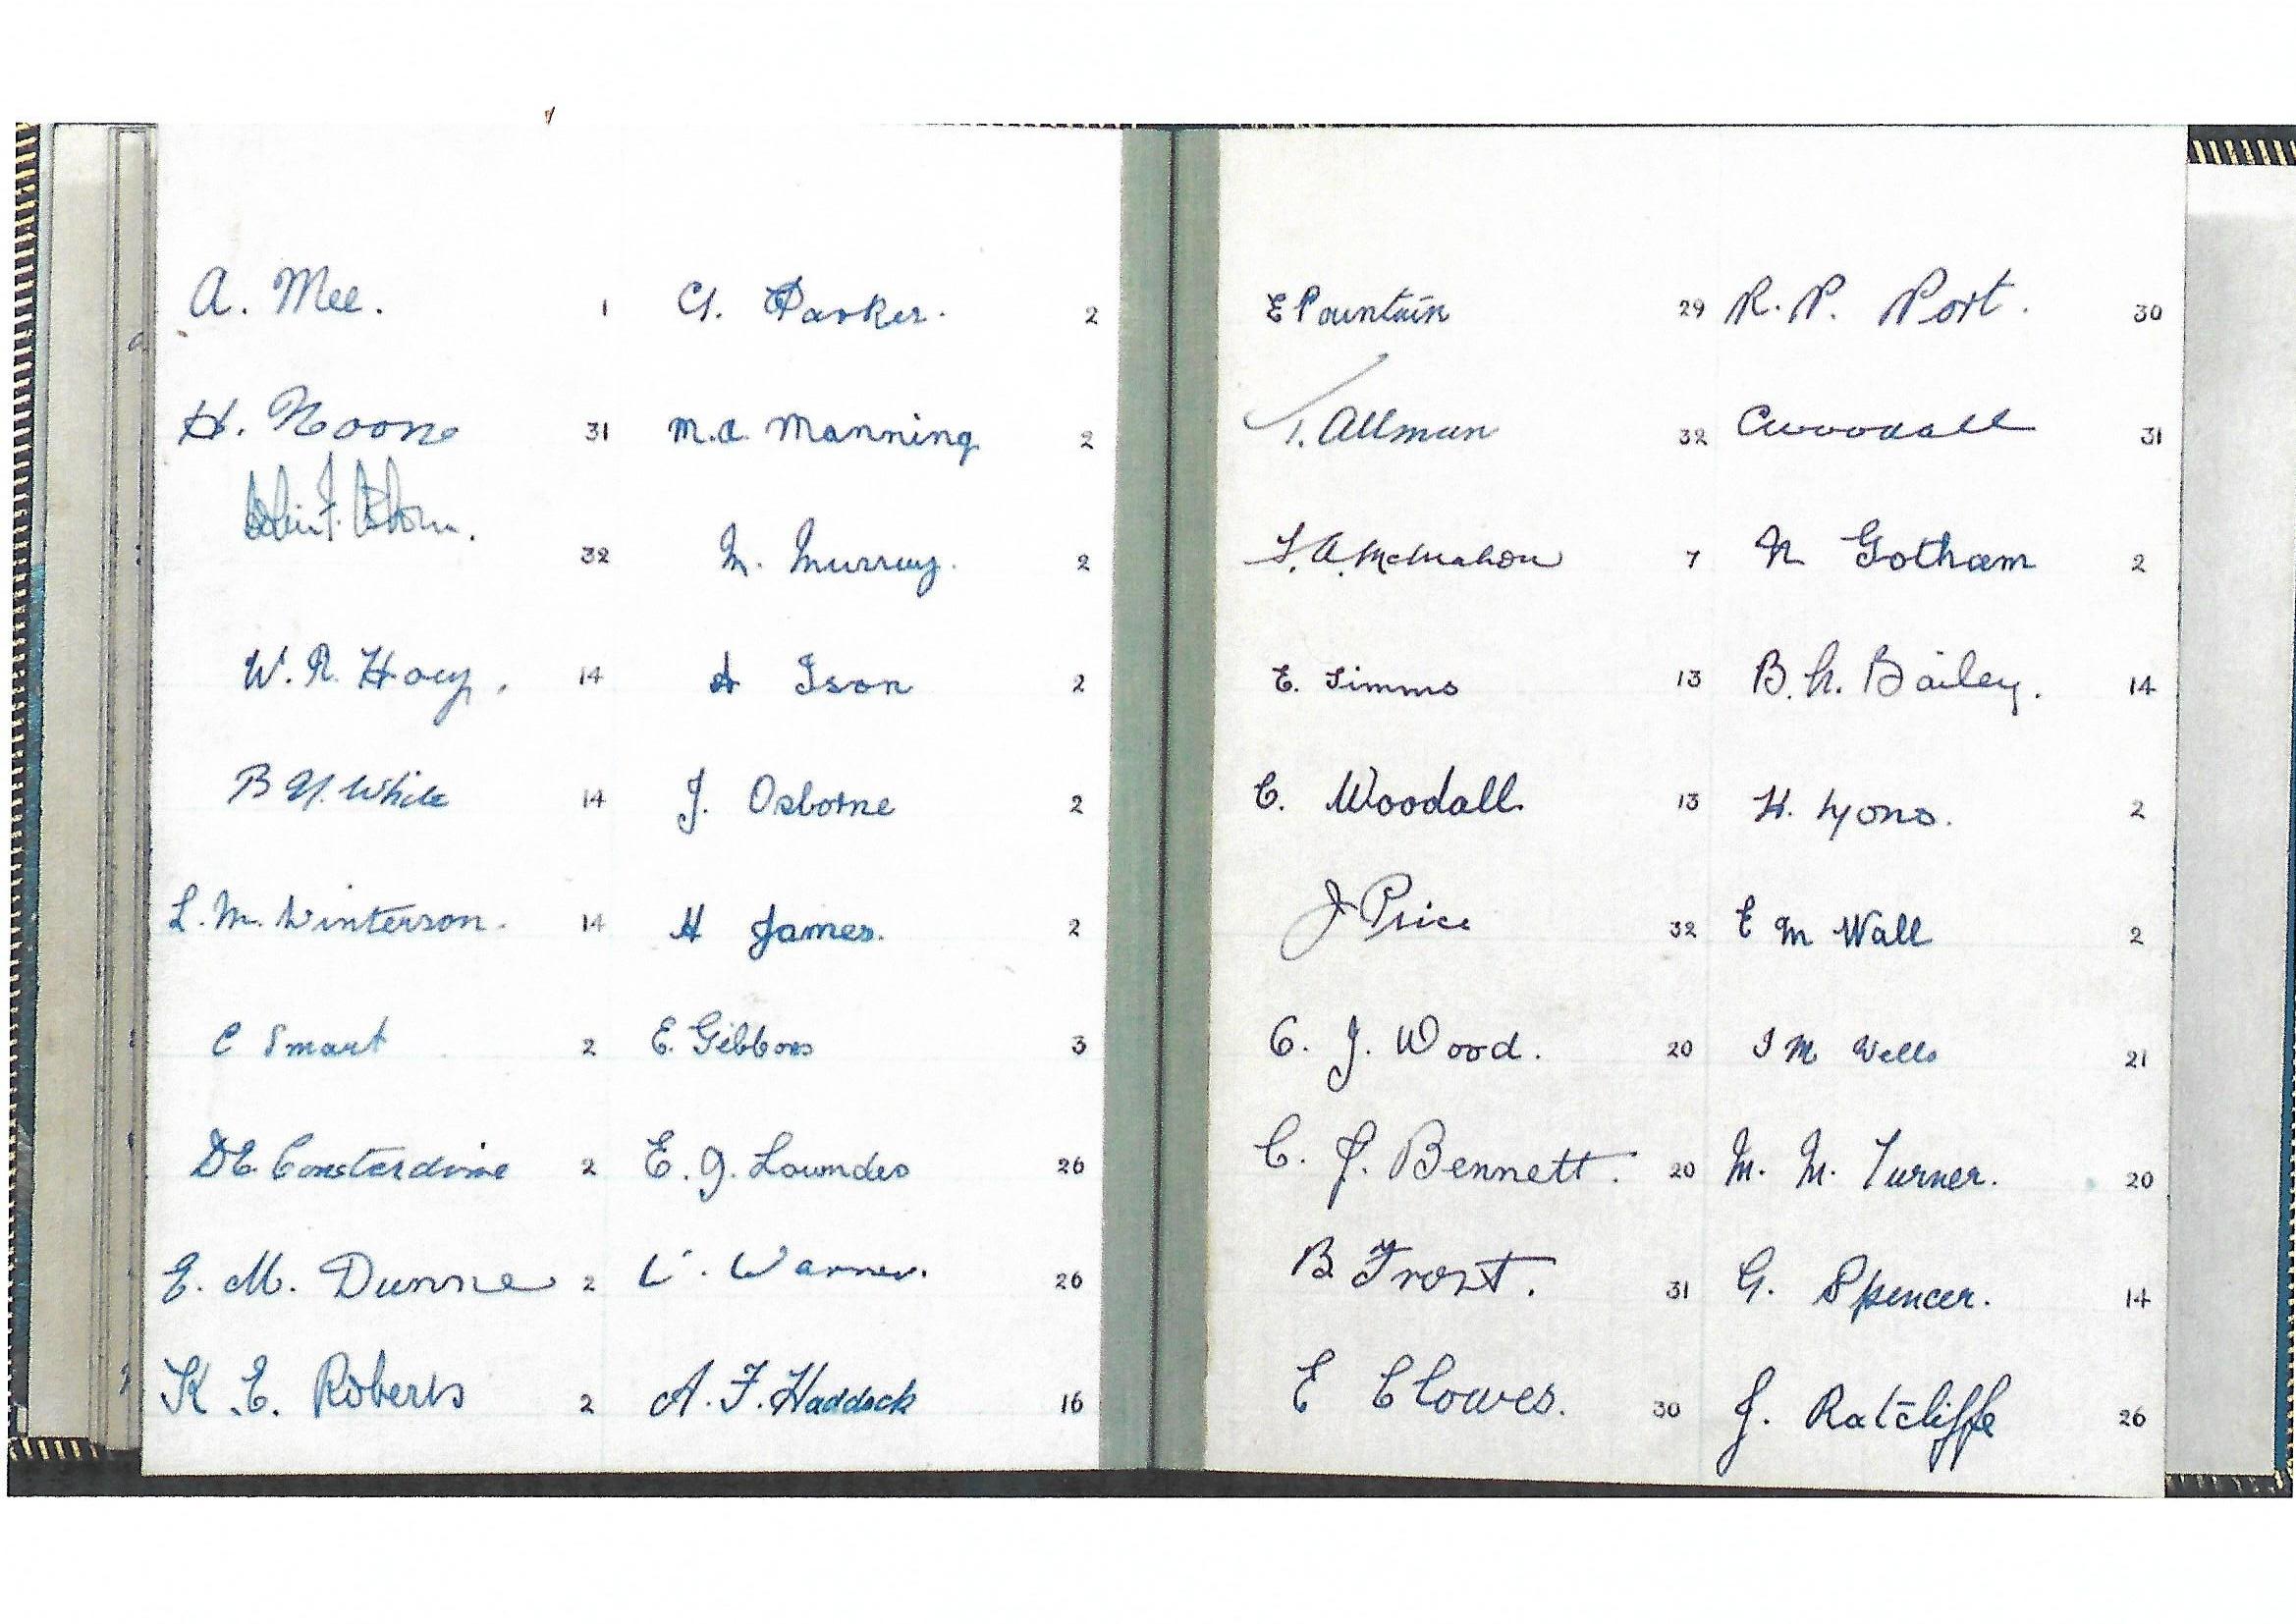 Staff List 1947